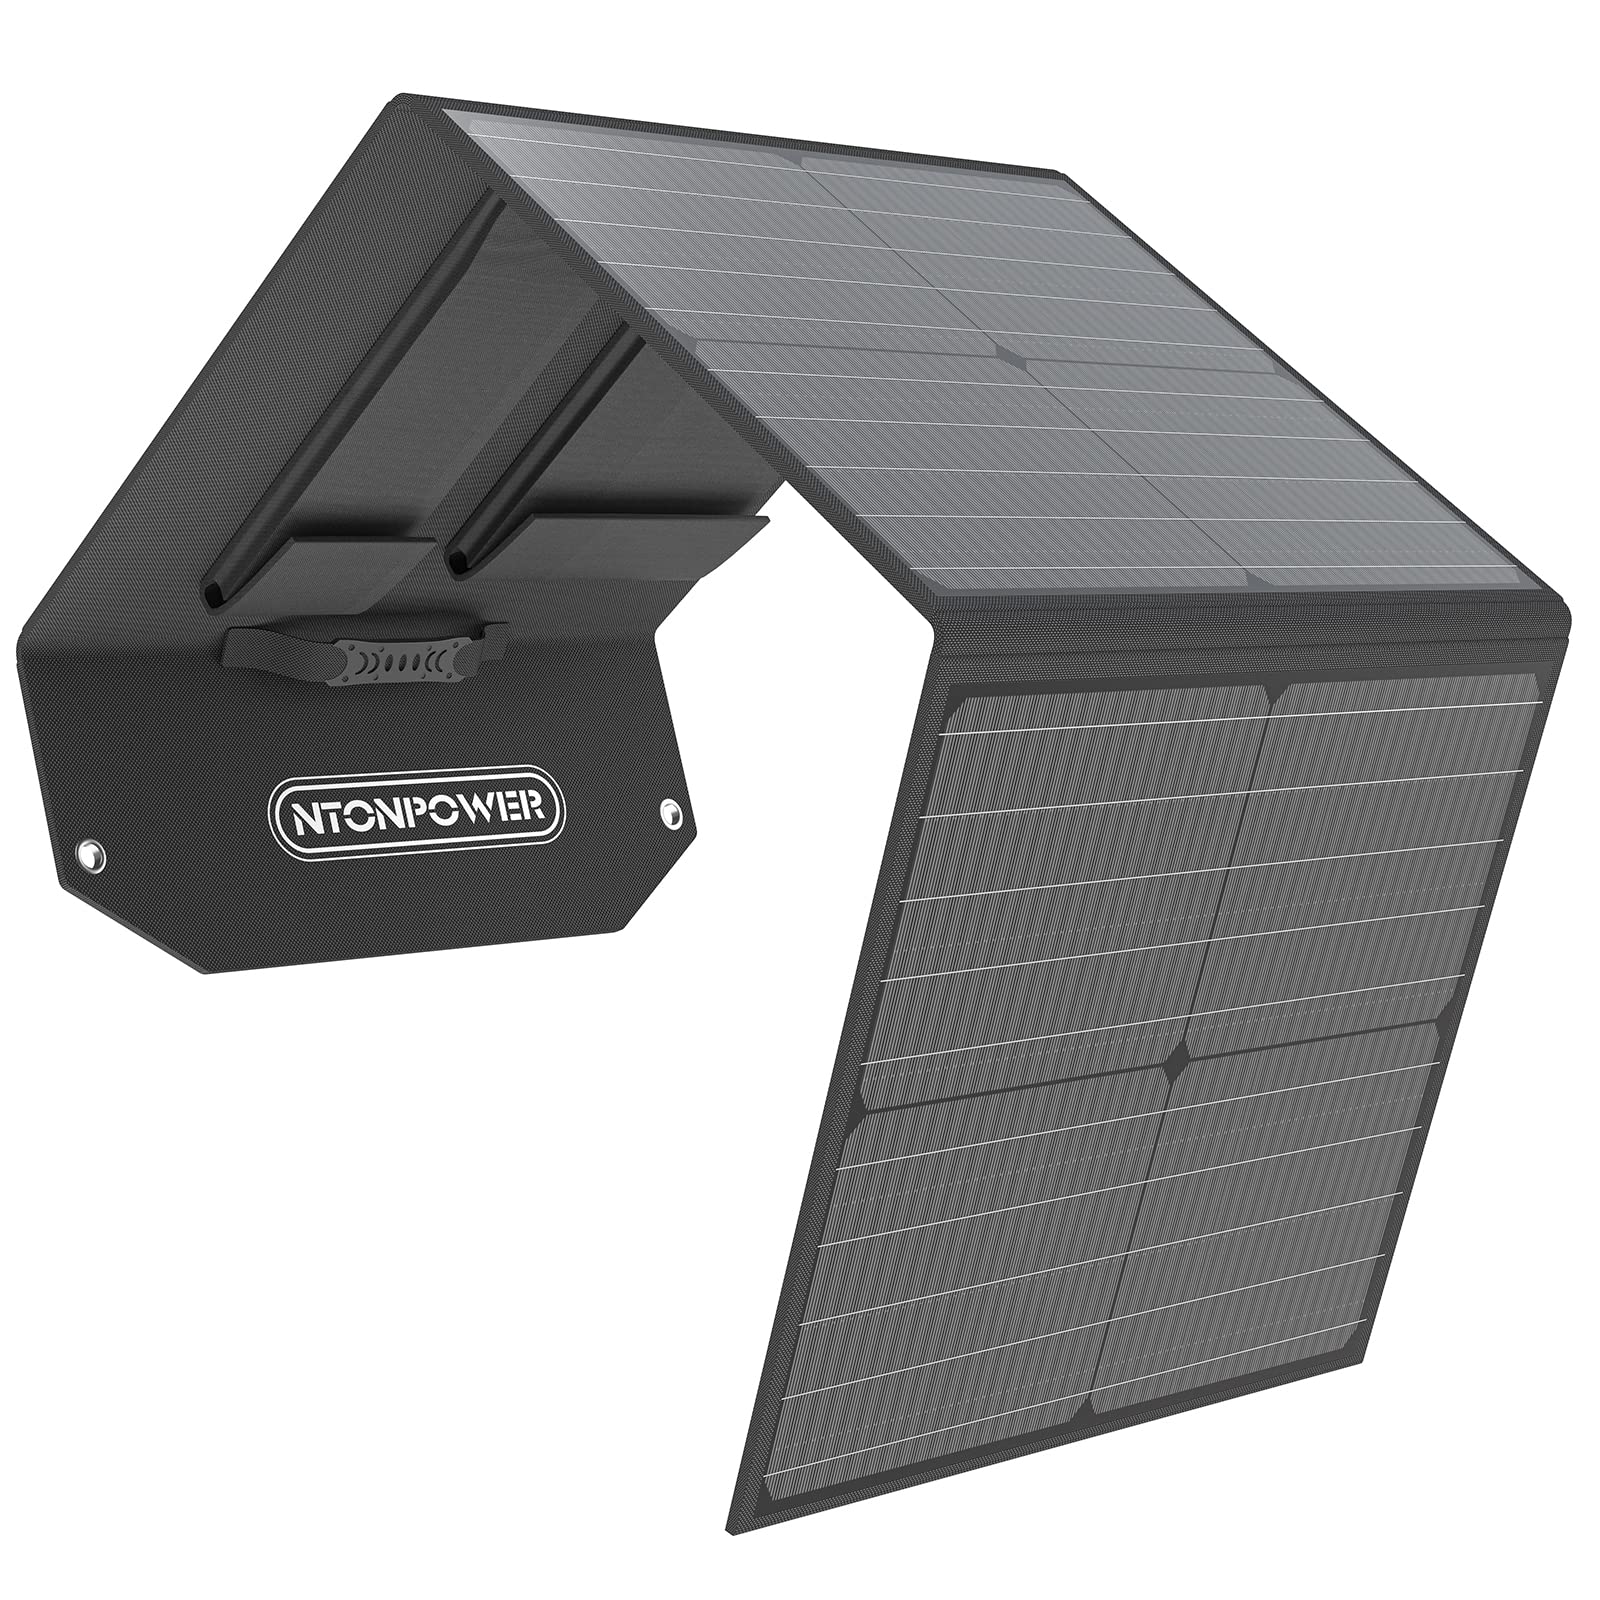 NTONPOWER Solarpanel Faltbar 60W, Monokristallin Solar Panel Solarmodul Tragbar Solarladegerät mit USB/DC Ausgang für Smartphone Powerstation Camping